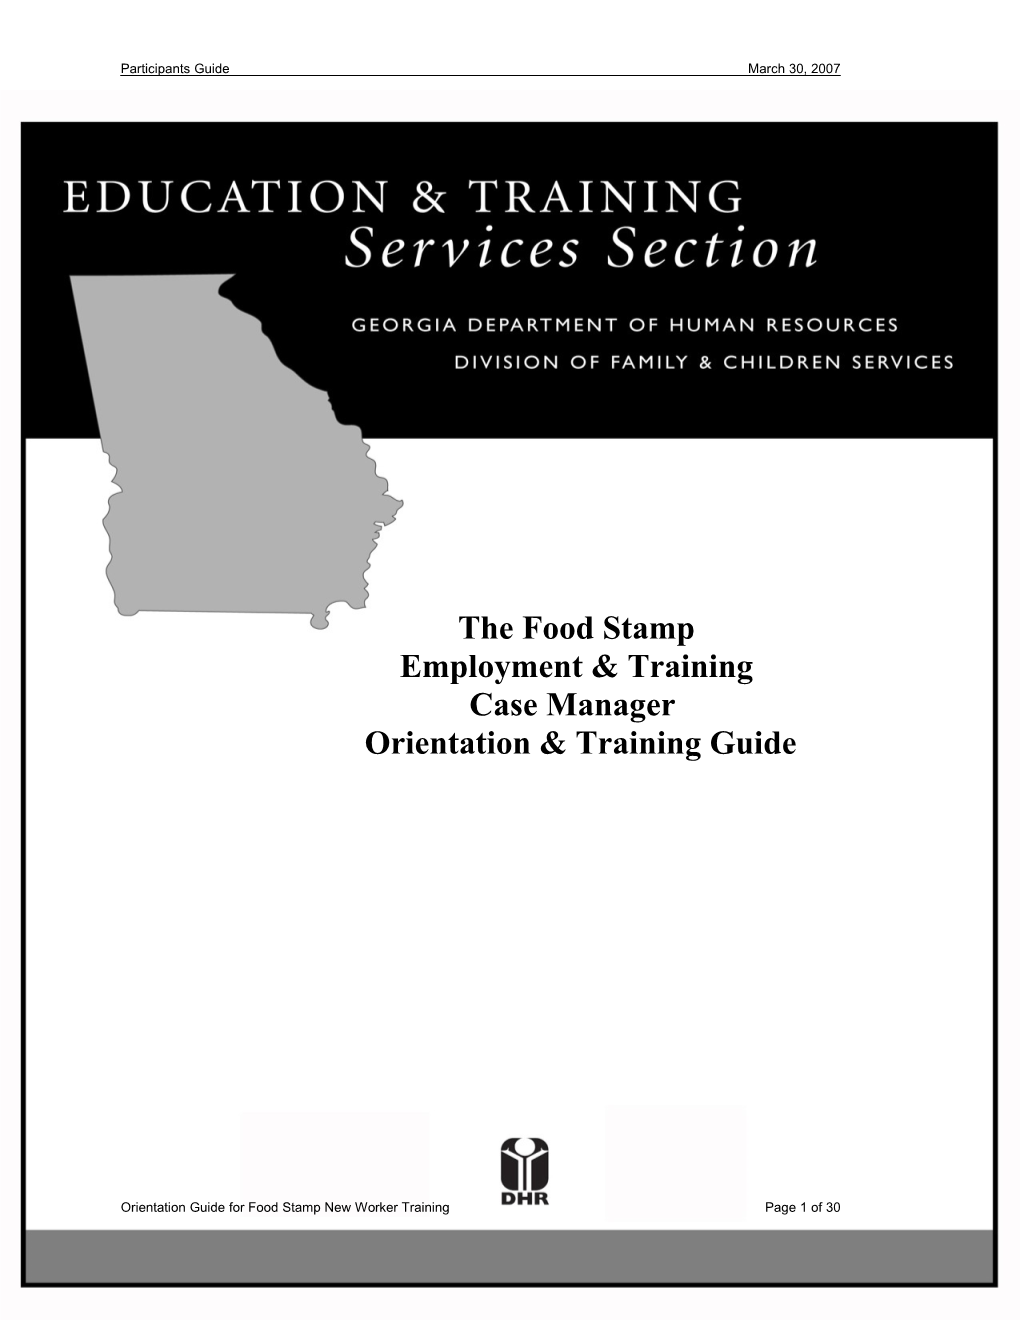 Orientation & Training Guide